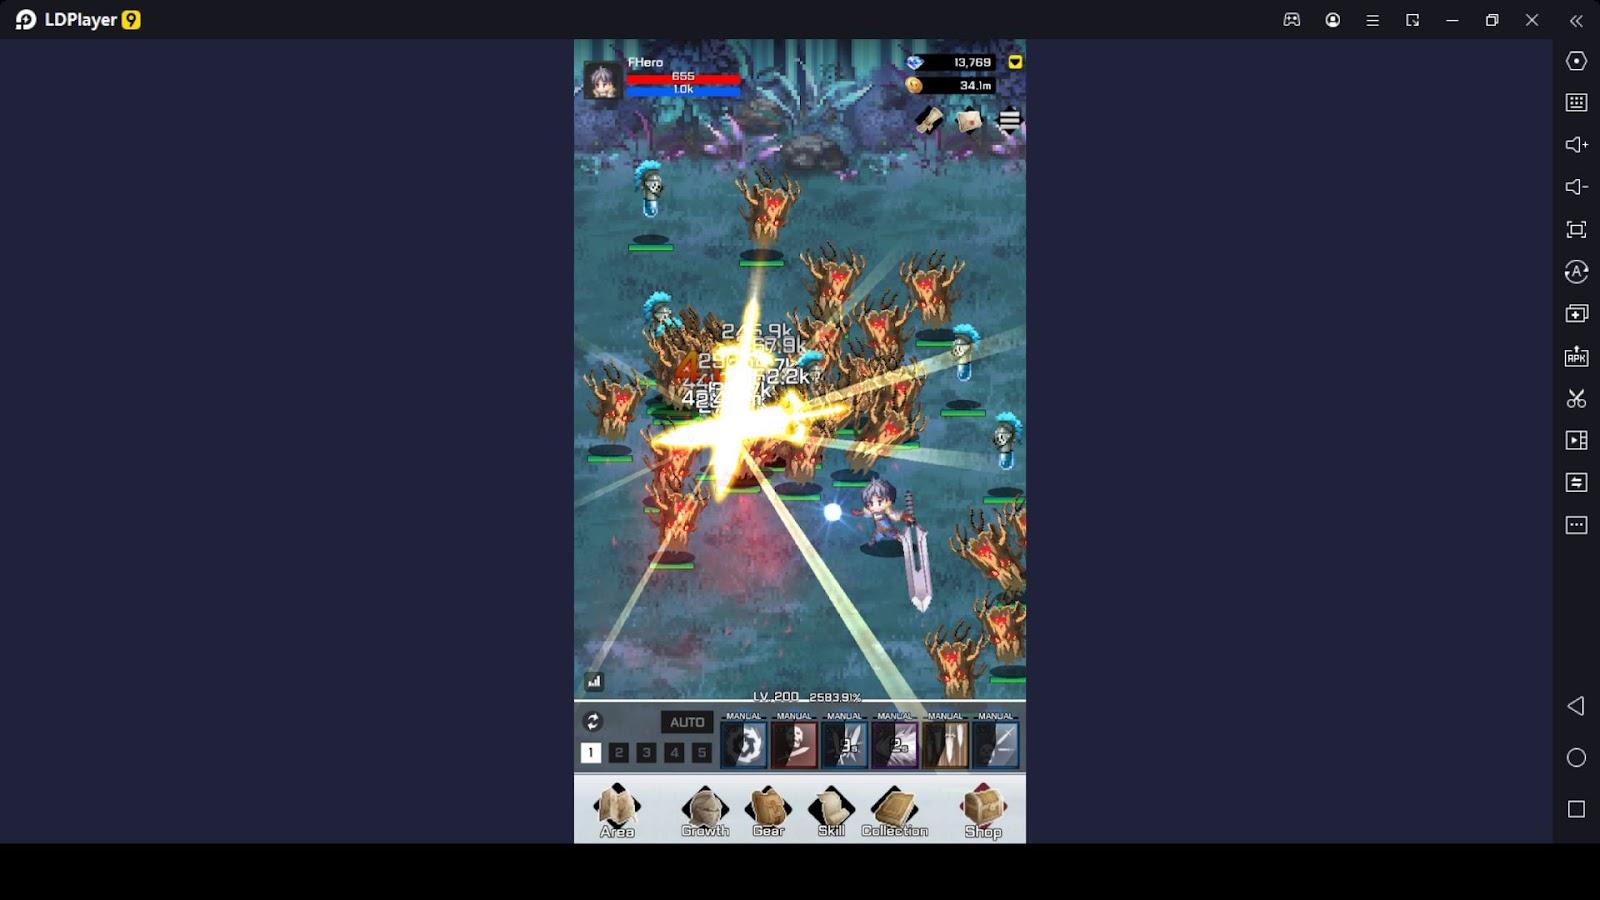 Sword Fighters Simulator Codes: Unleash Your Sword Mastery! - 2023  December-Redeem Code-LDPlayer